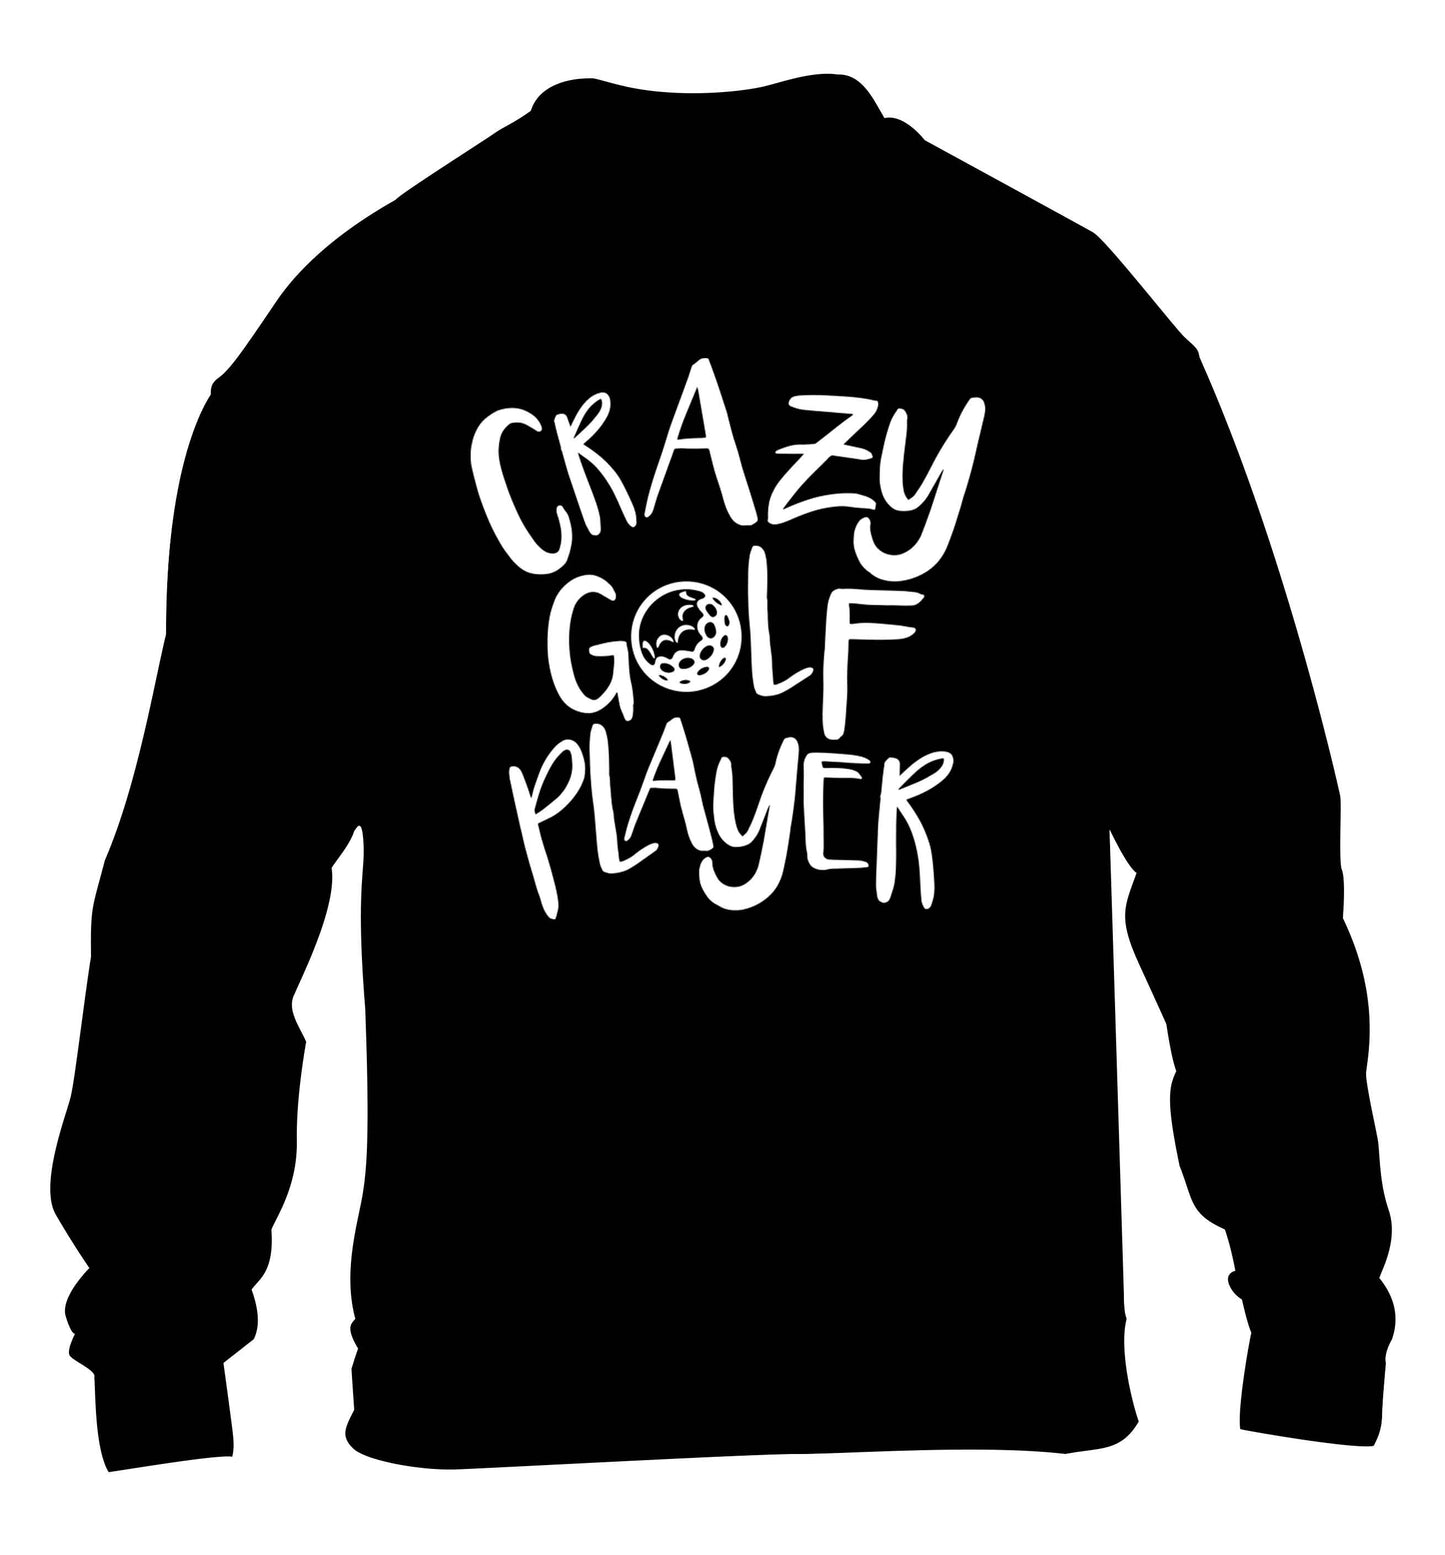 Crazy golf player children's black sweater 12-13 Years